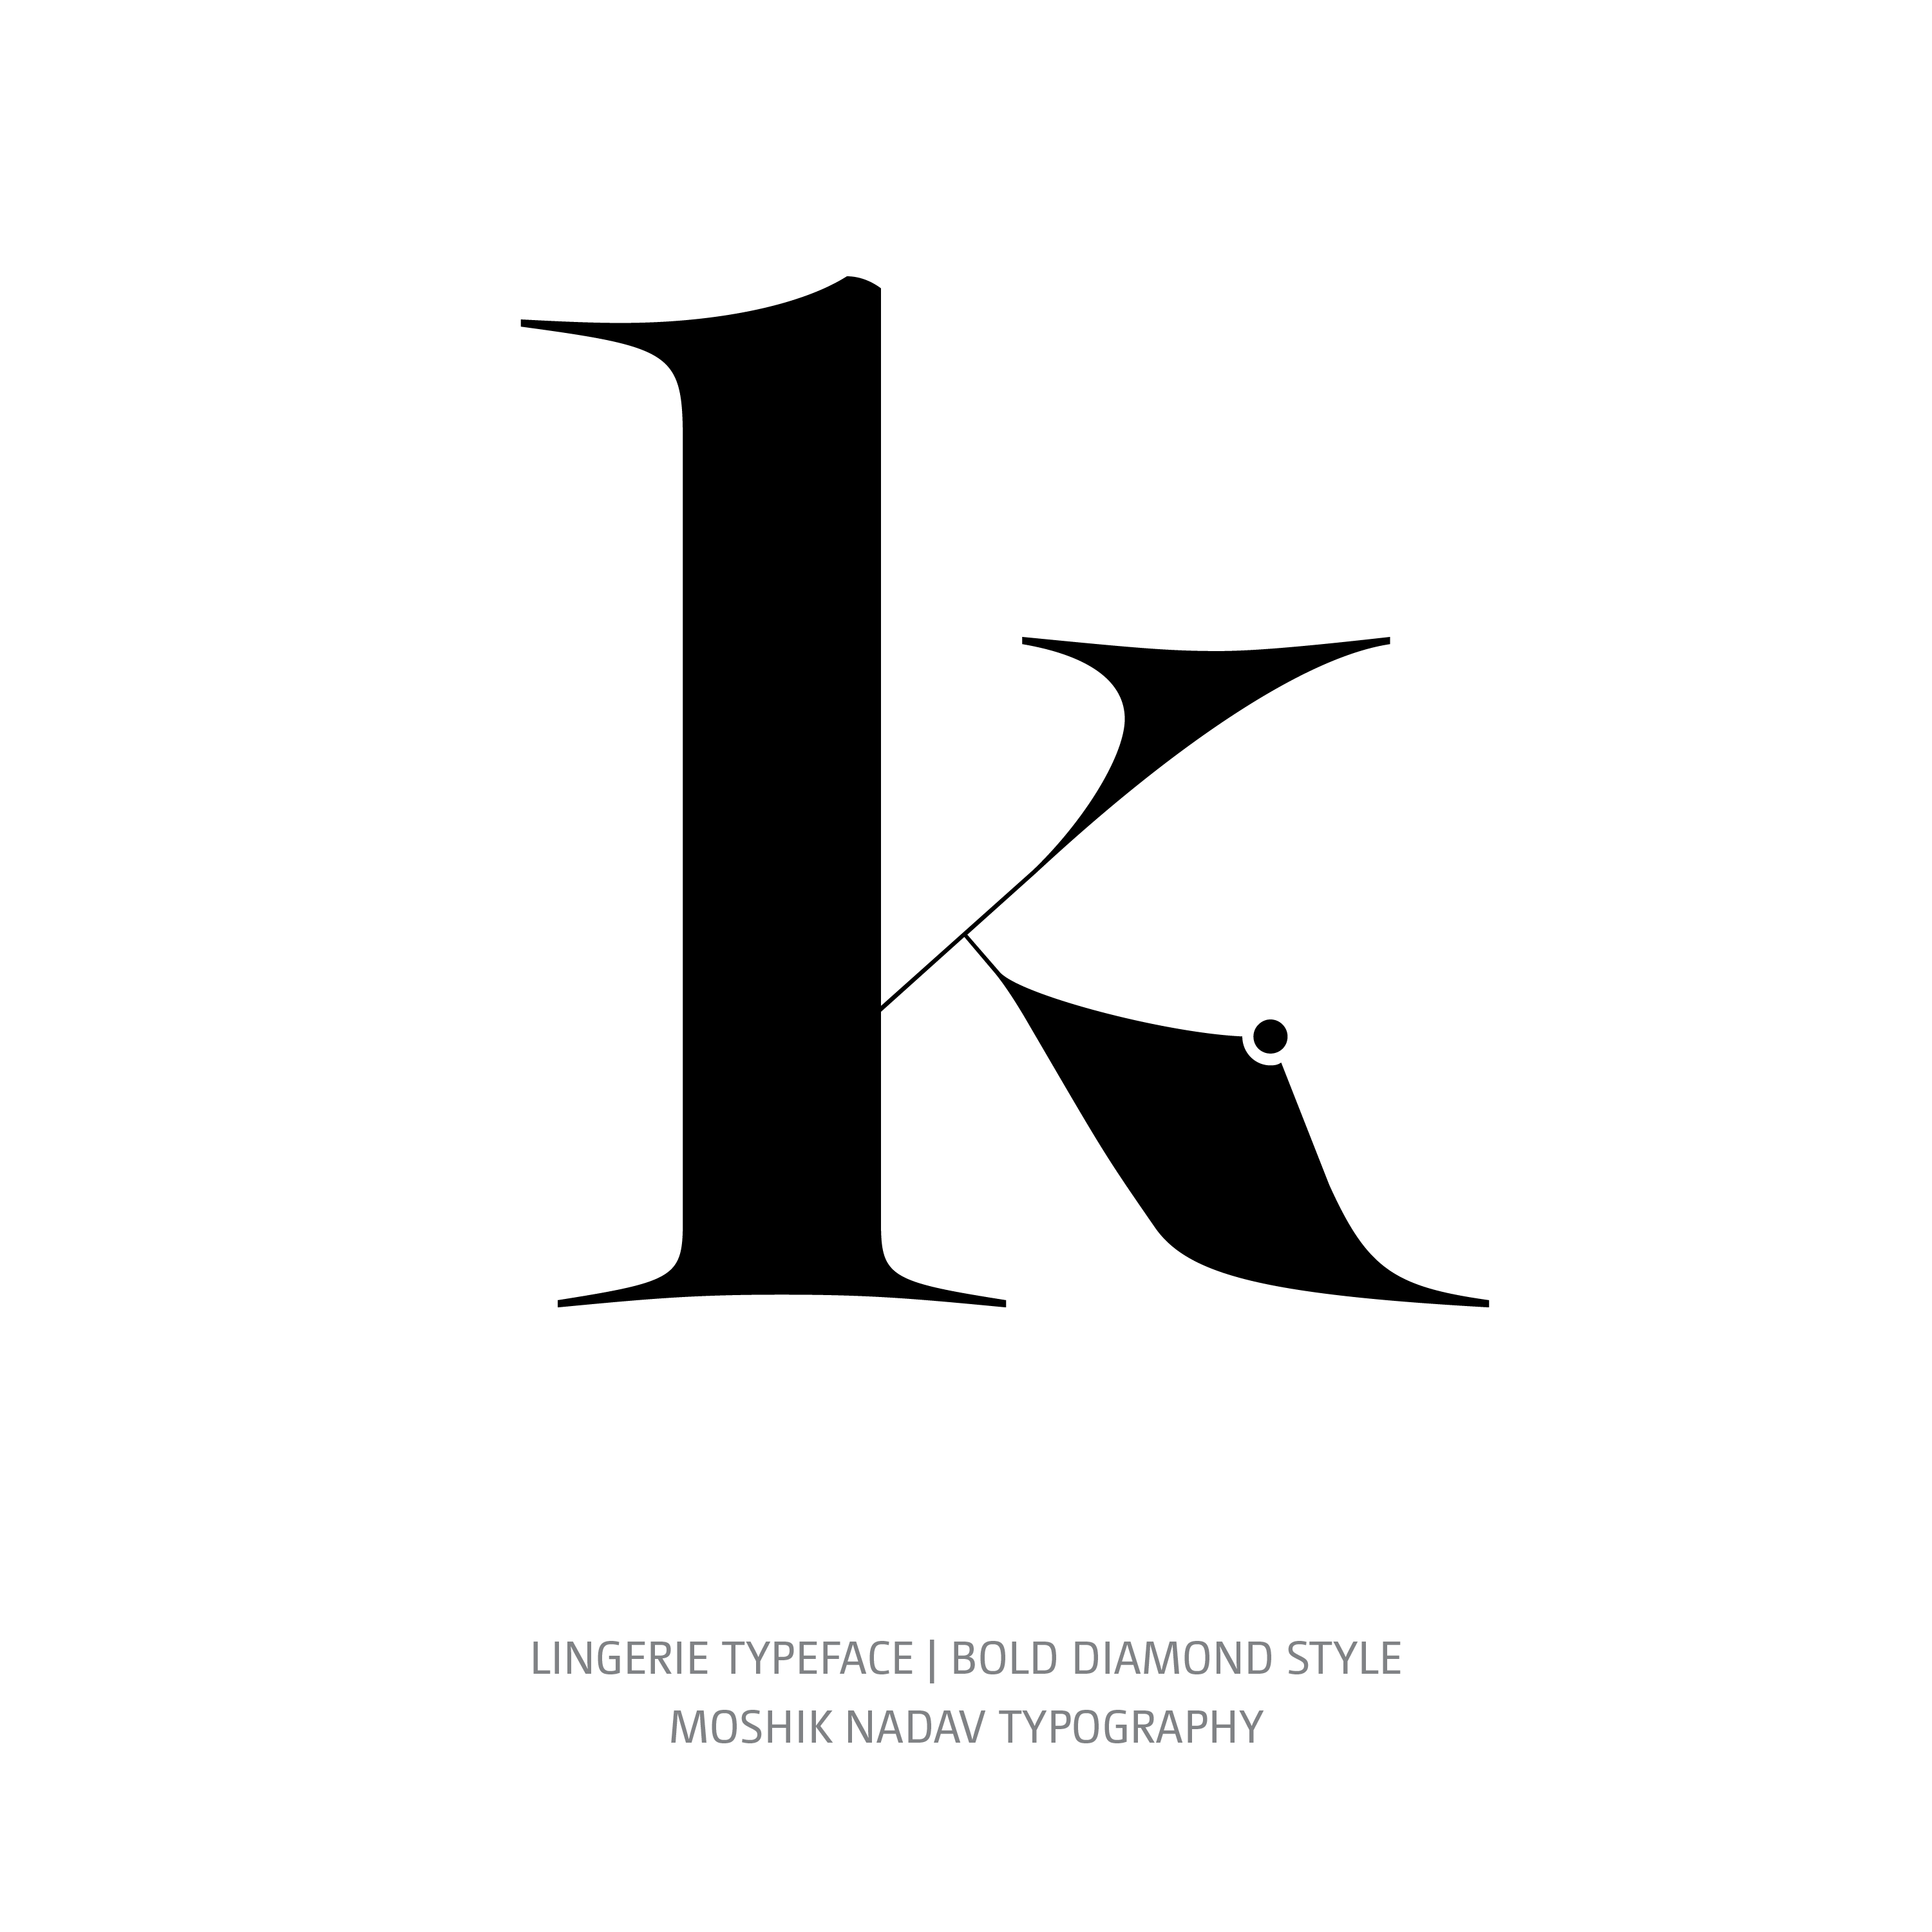 Lingerie Typeface Bold Diamond k